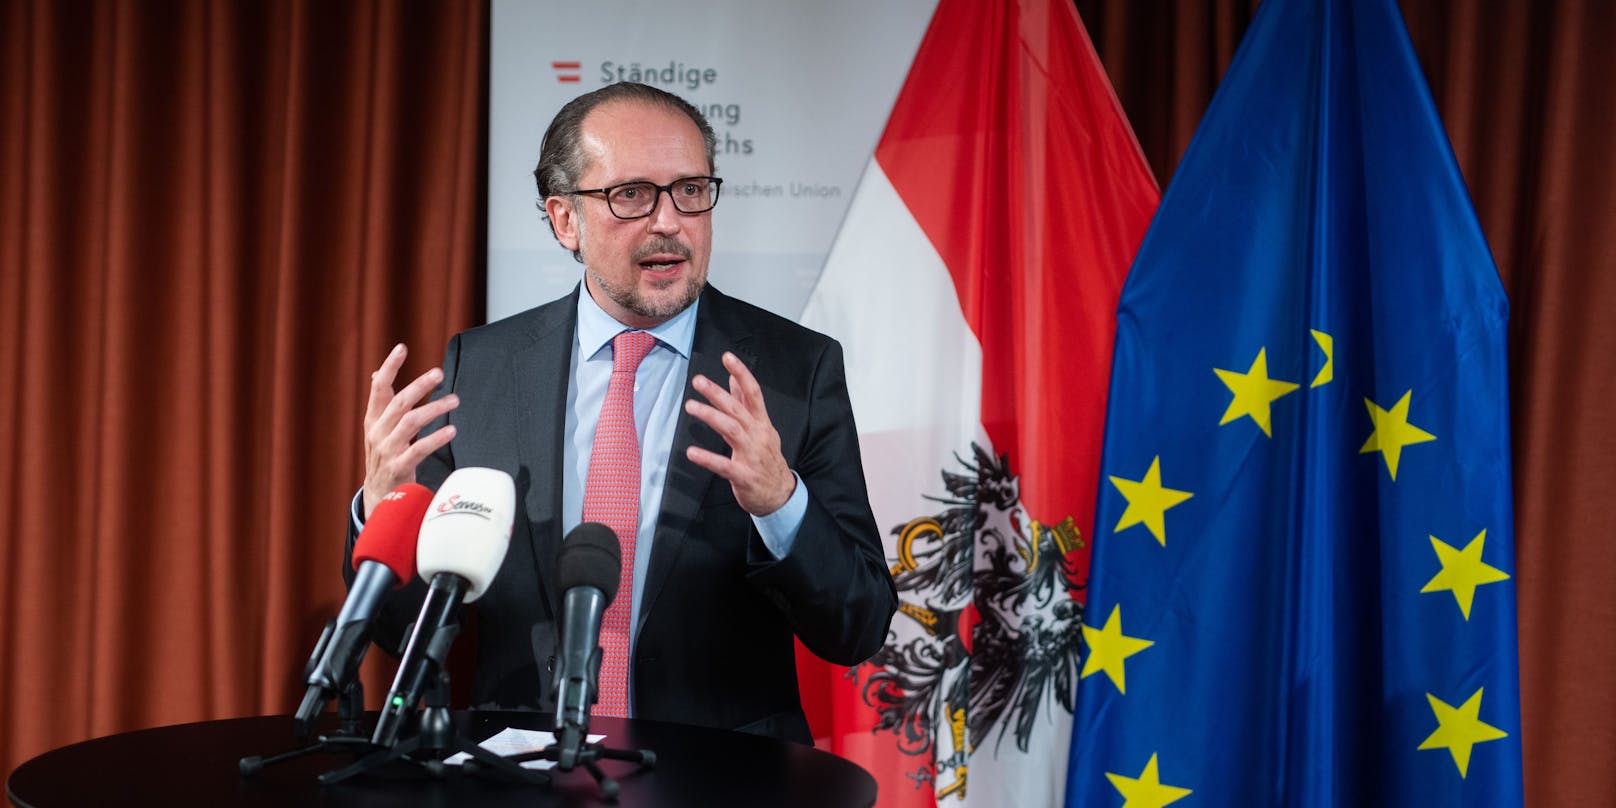 Bundeskanzler Alexander Schallenberg (ÖVP) kündigte im Rahmen des EU-Gipfels Beratungen zum Thema Corona an.